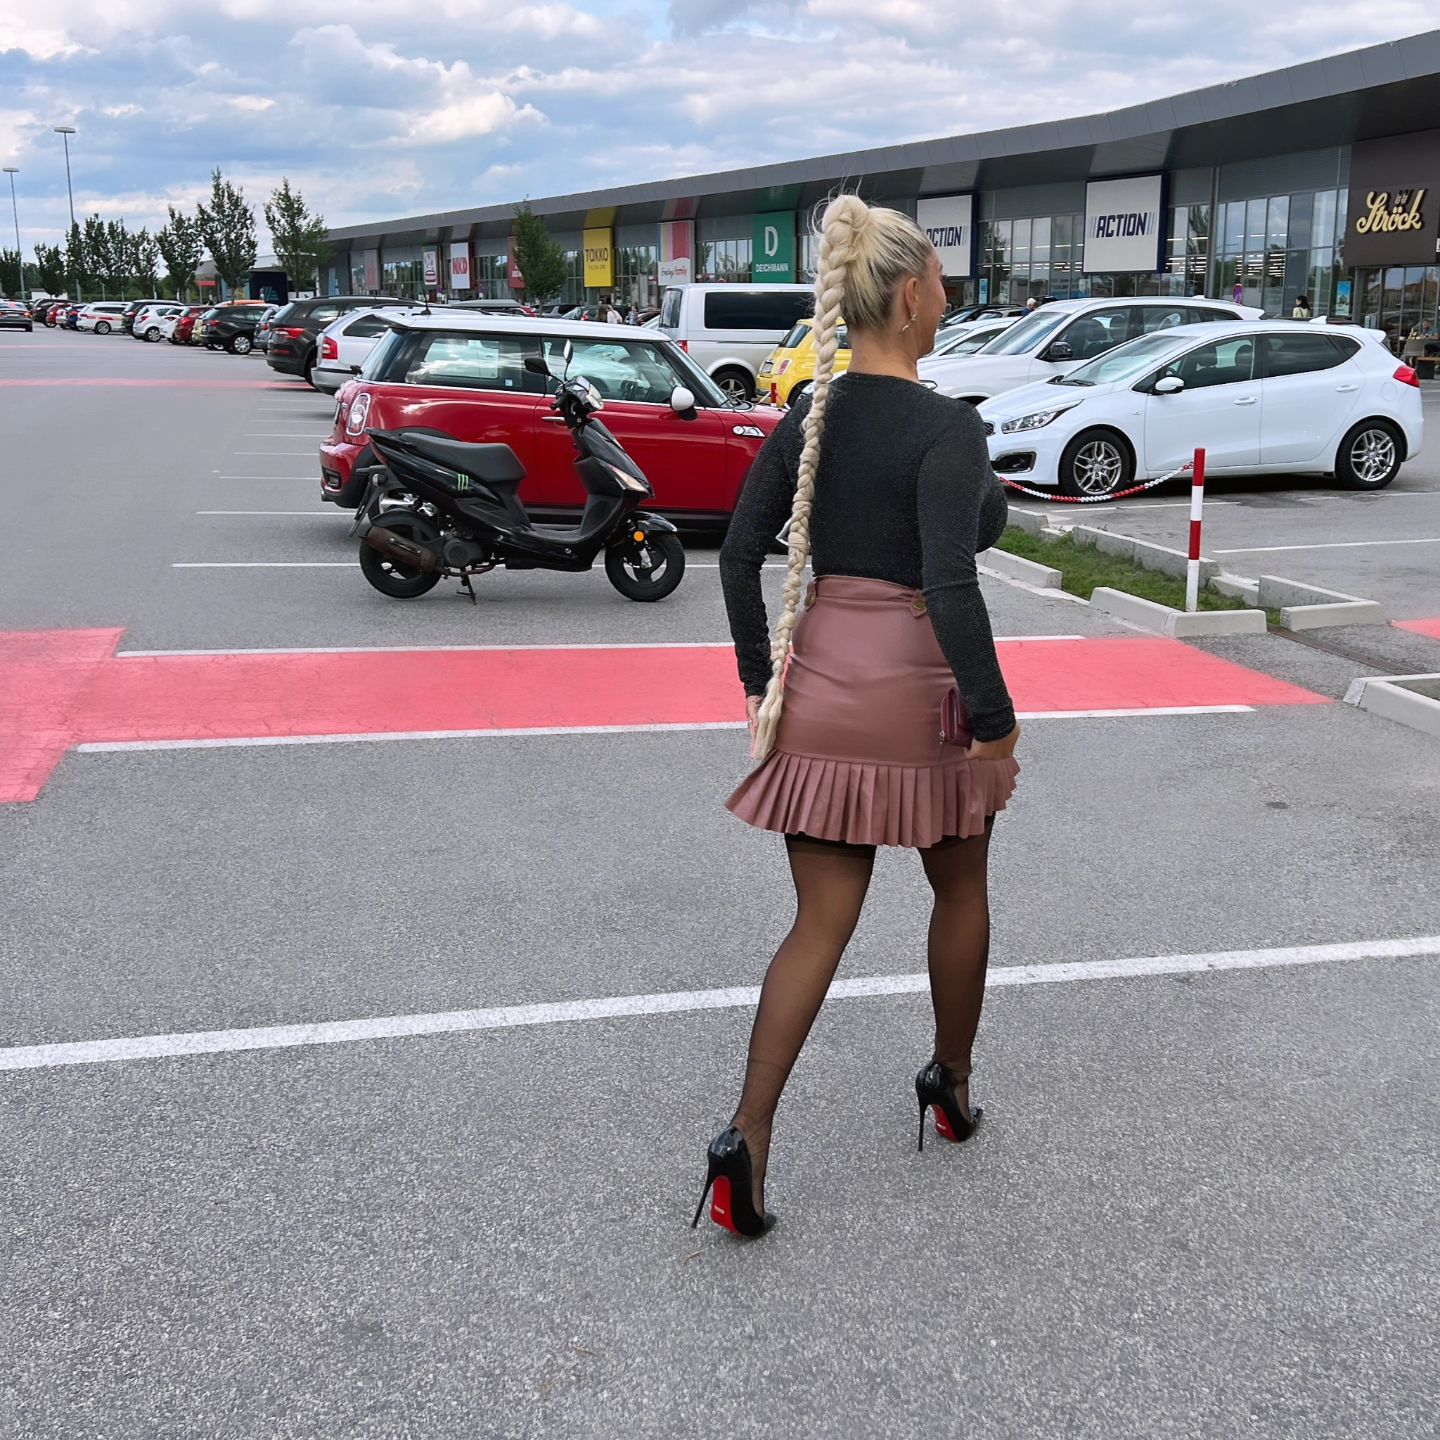 Shopping time - black top + brown leather skirt + black stilettos + black stockings
.
.
.
.
.

#shopping #supermarket #highheelslover #blacknylons #blackstockings #stockingtops #wien #kittsee #parndorf